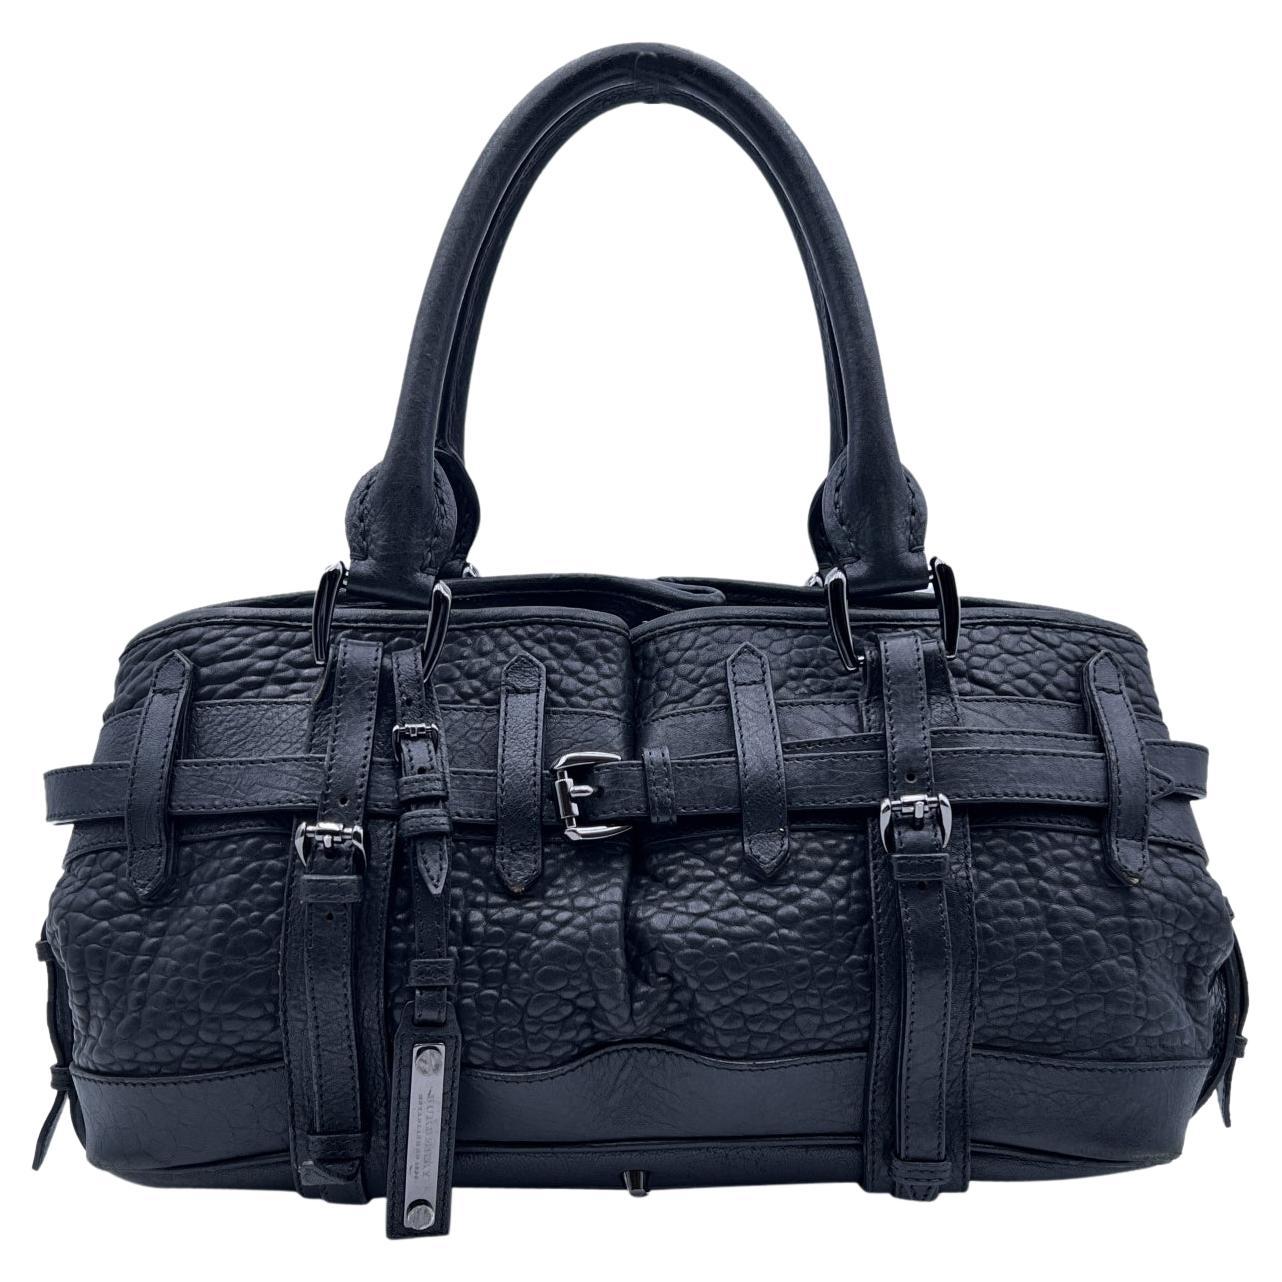 Burberry Black Leather Belted Rowan Tote Bag Satchel Handbag